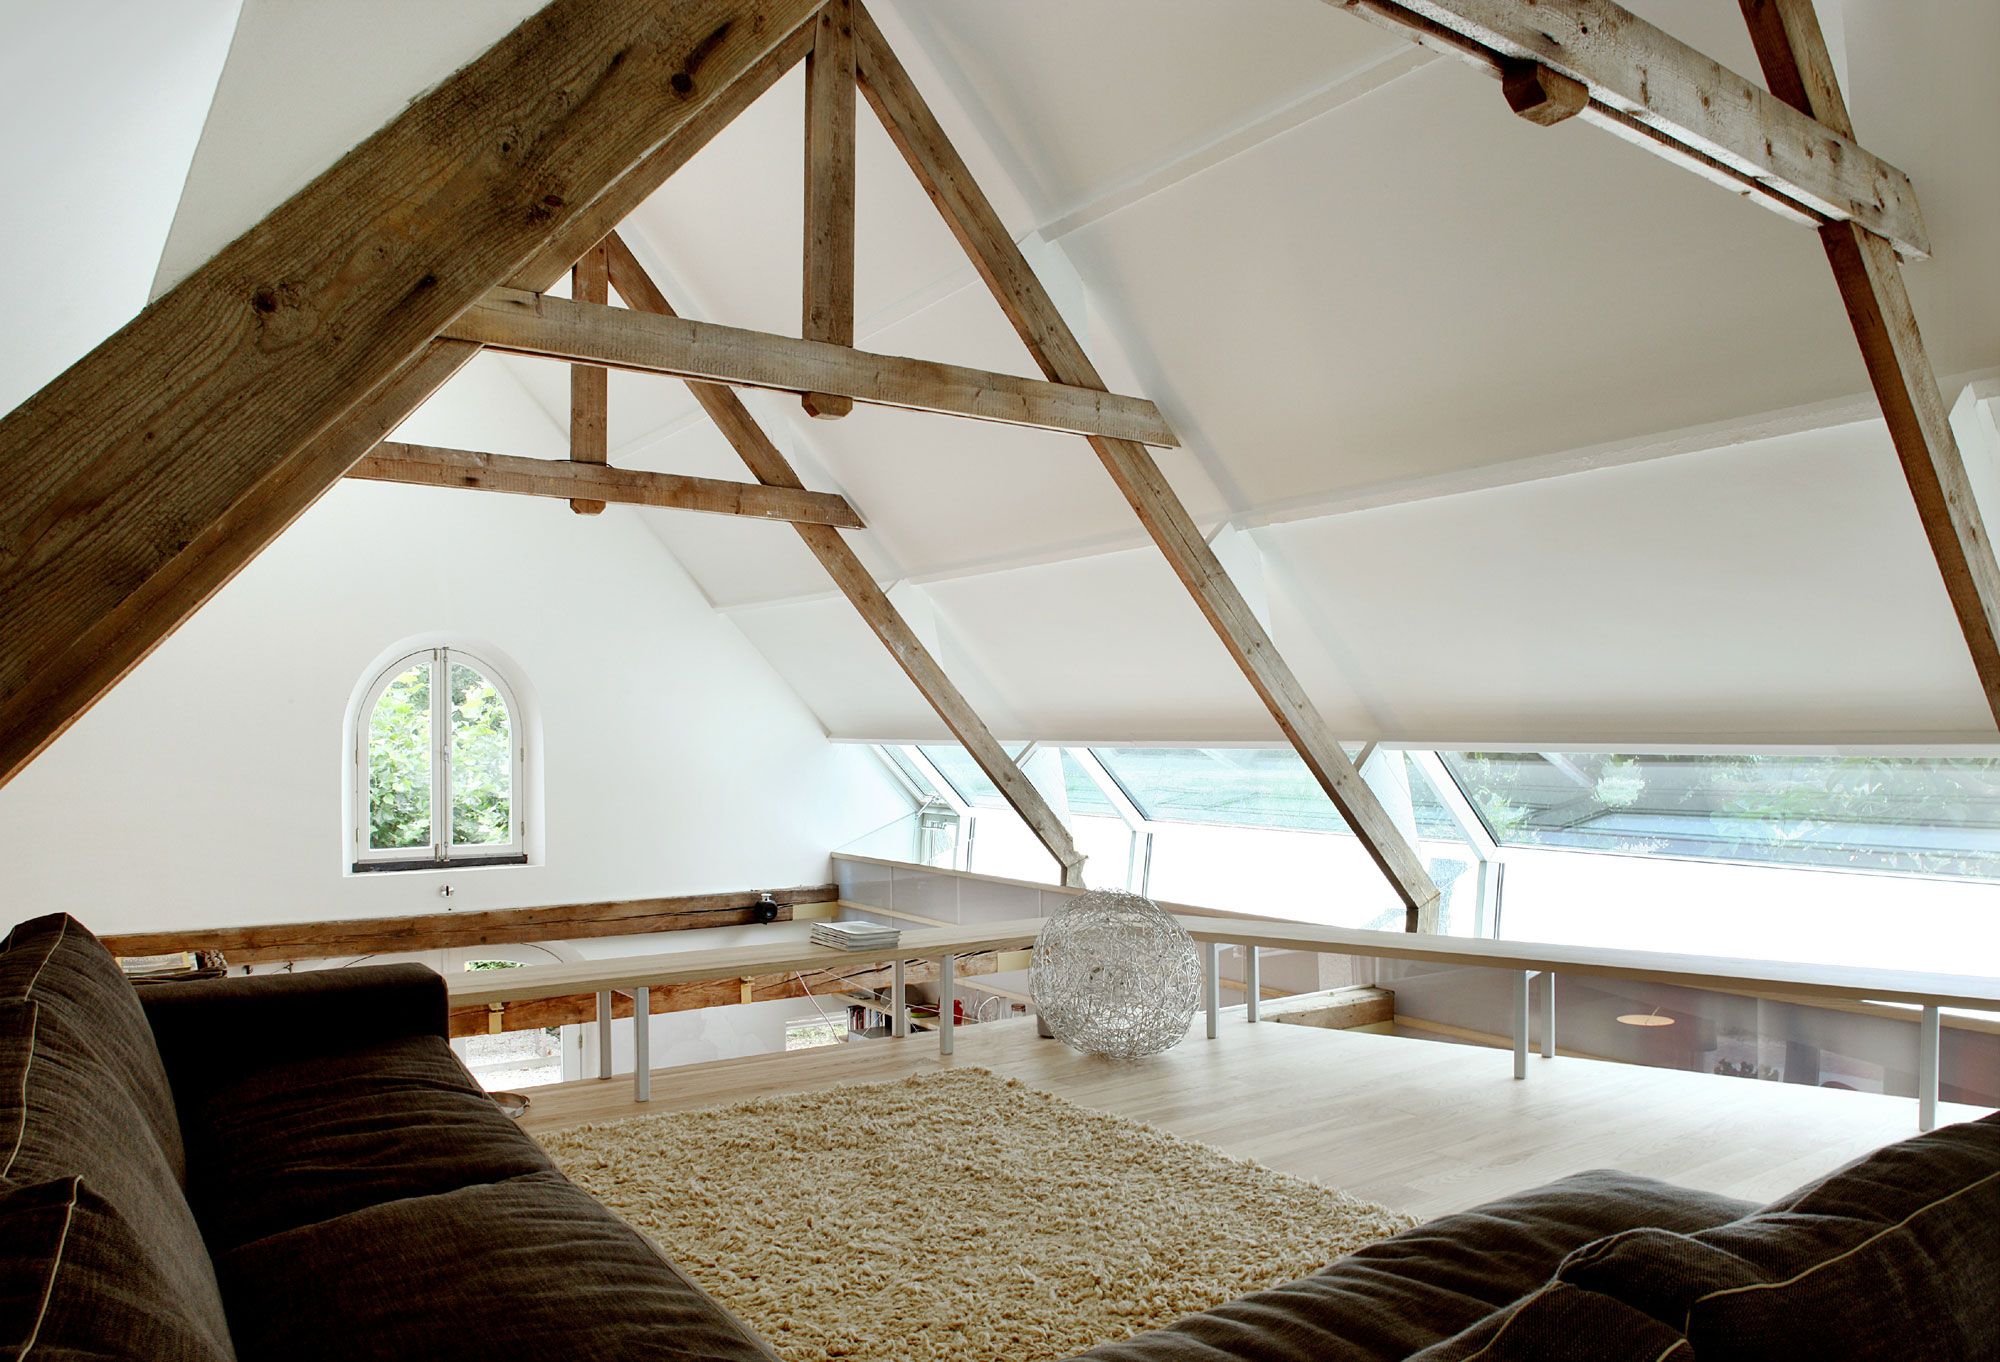 Дом-амбар: солнечный коттедж g от архитекторов из maxwan architects, гелдермалсен, нидерланды